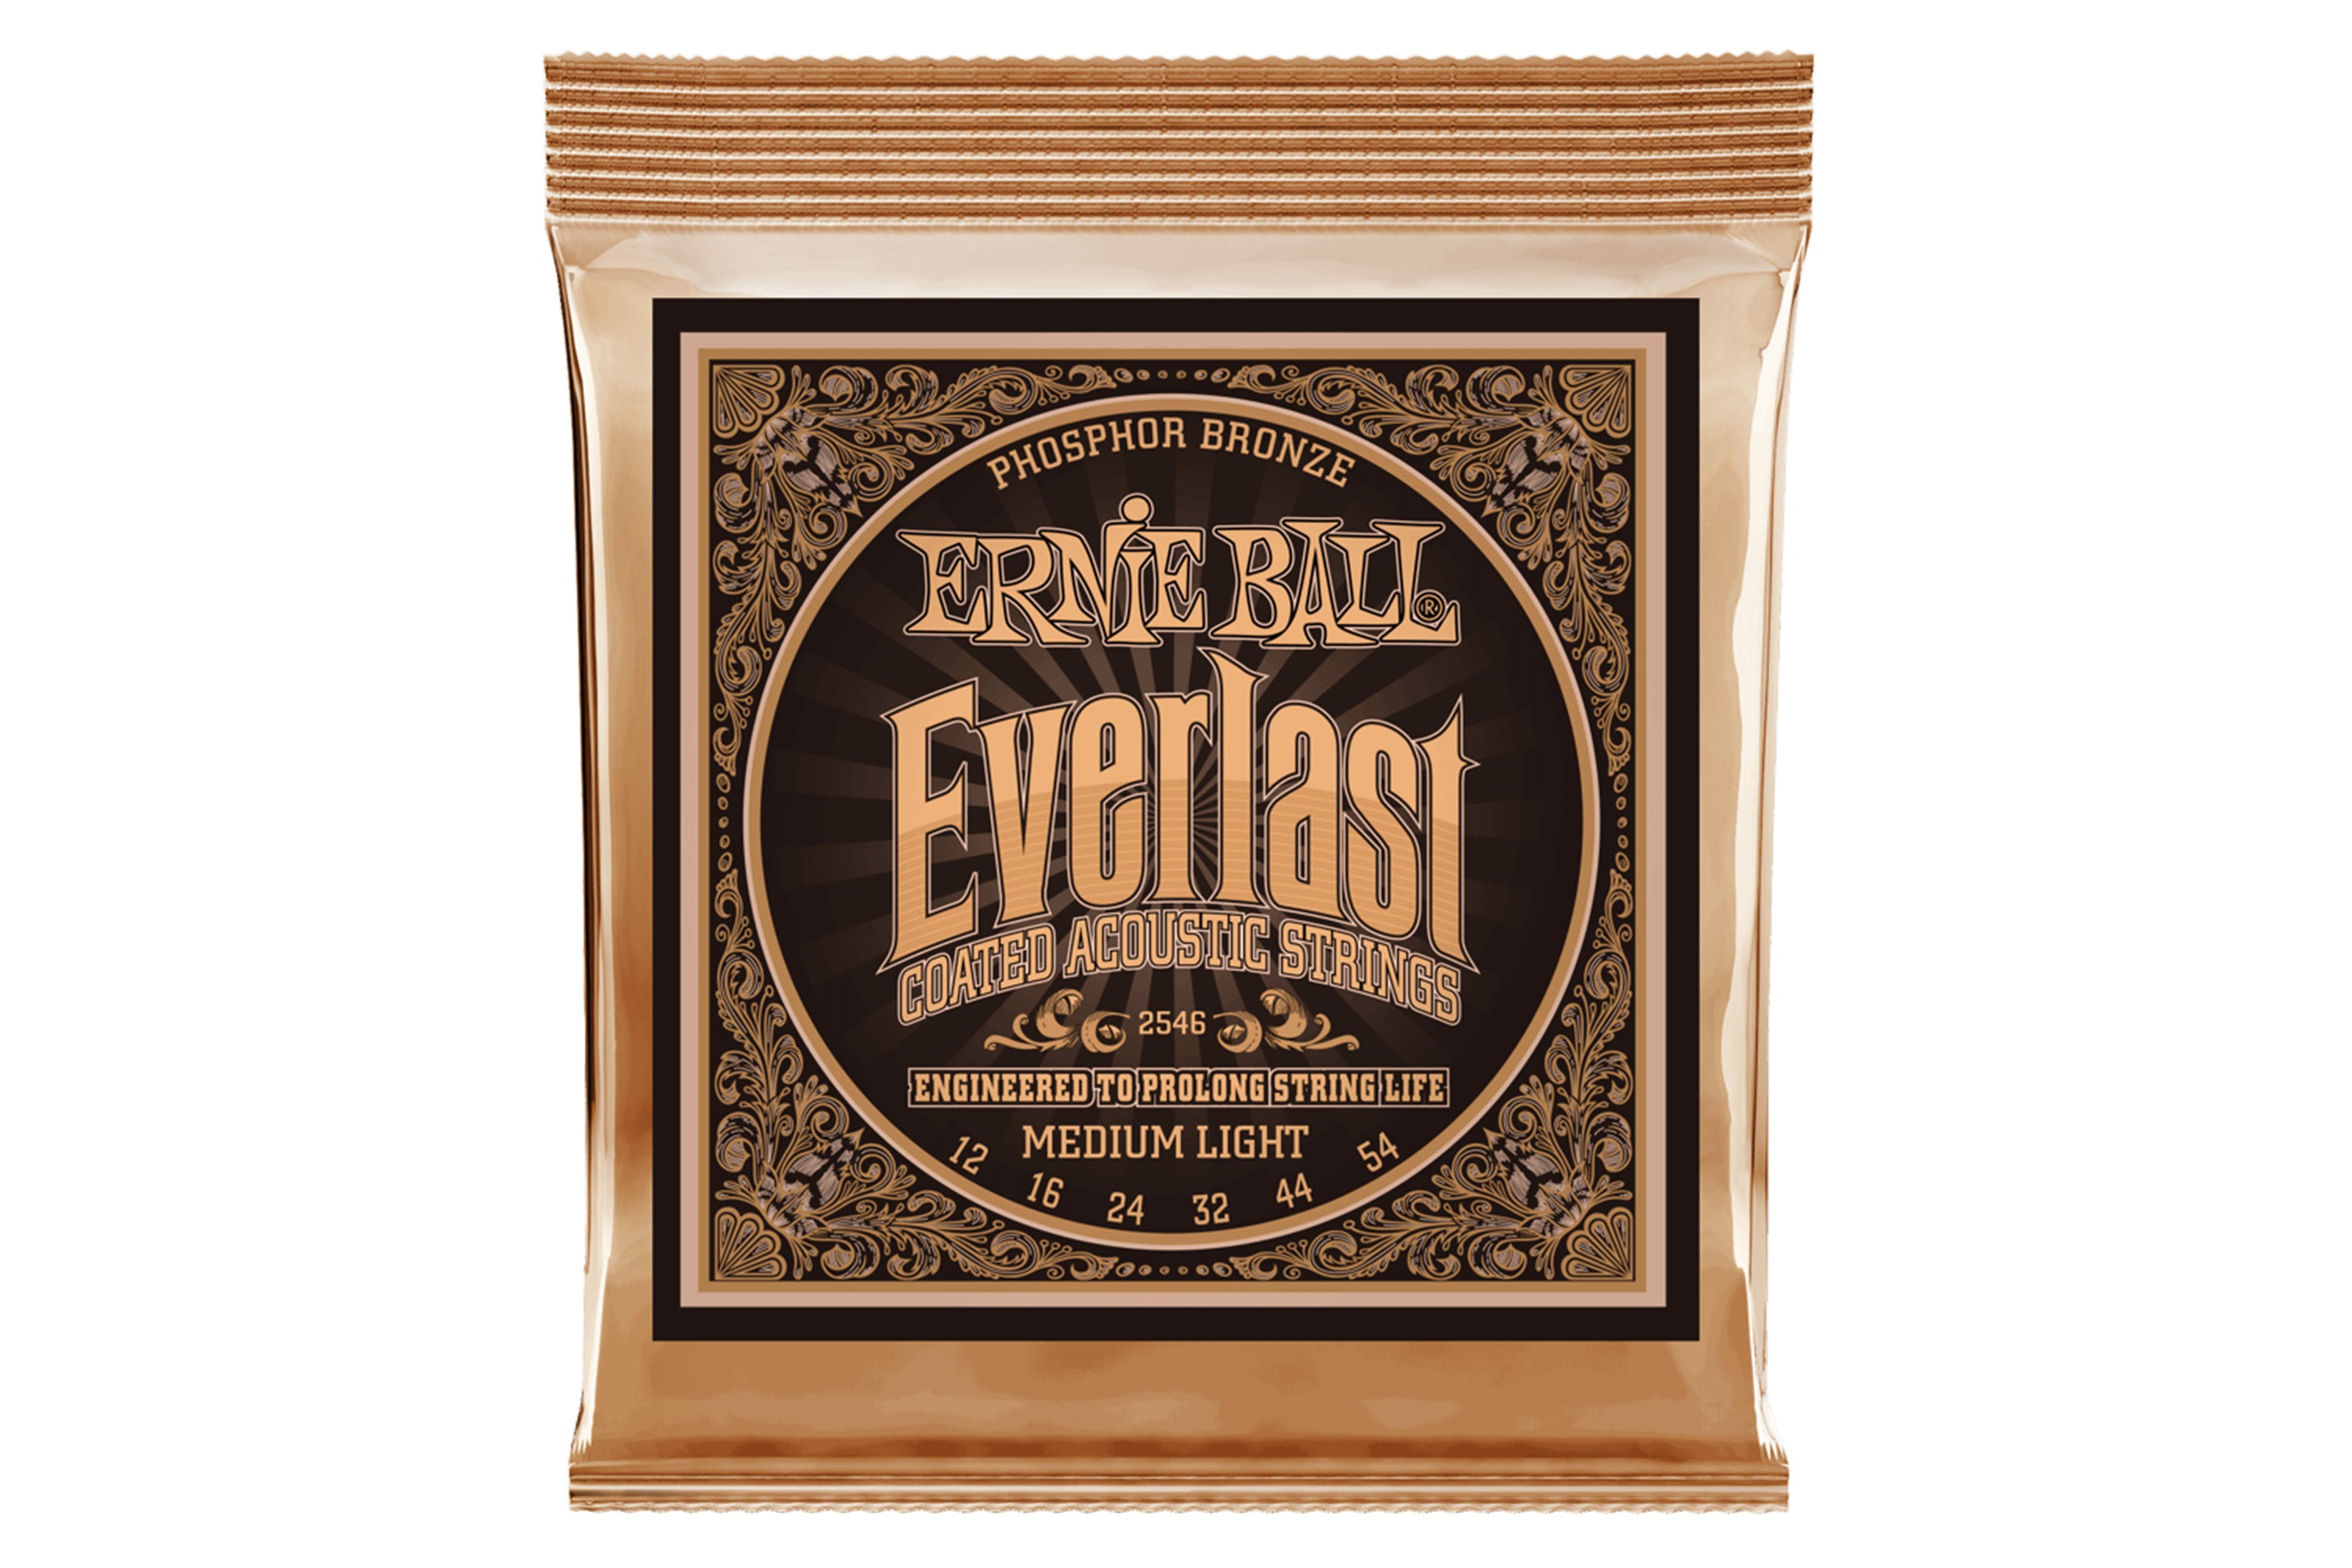 Ernie Ball Everlast Medium Light Coated Phosphor Bronze Acoustic Guitar Strings - 12-54 GAUGE